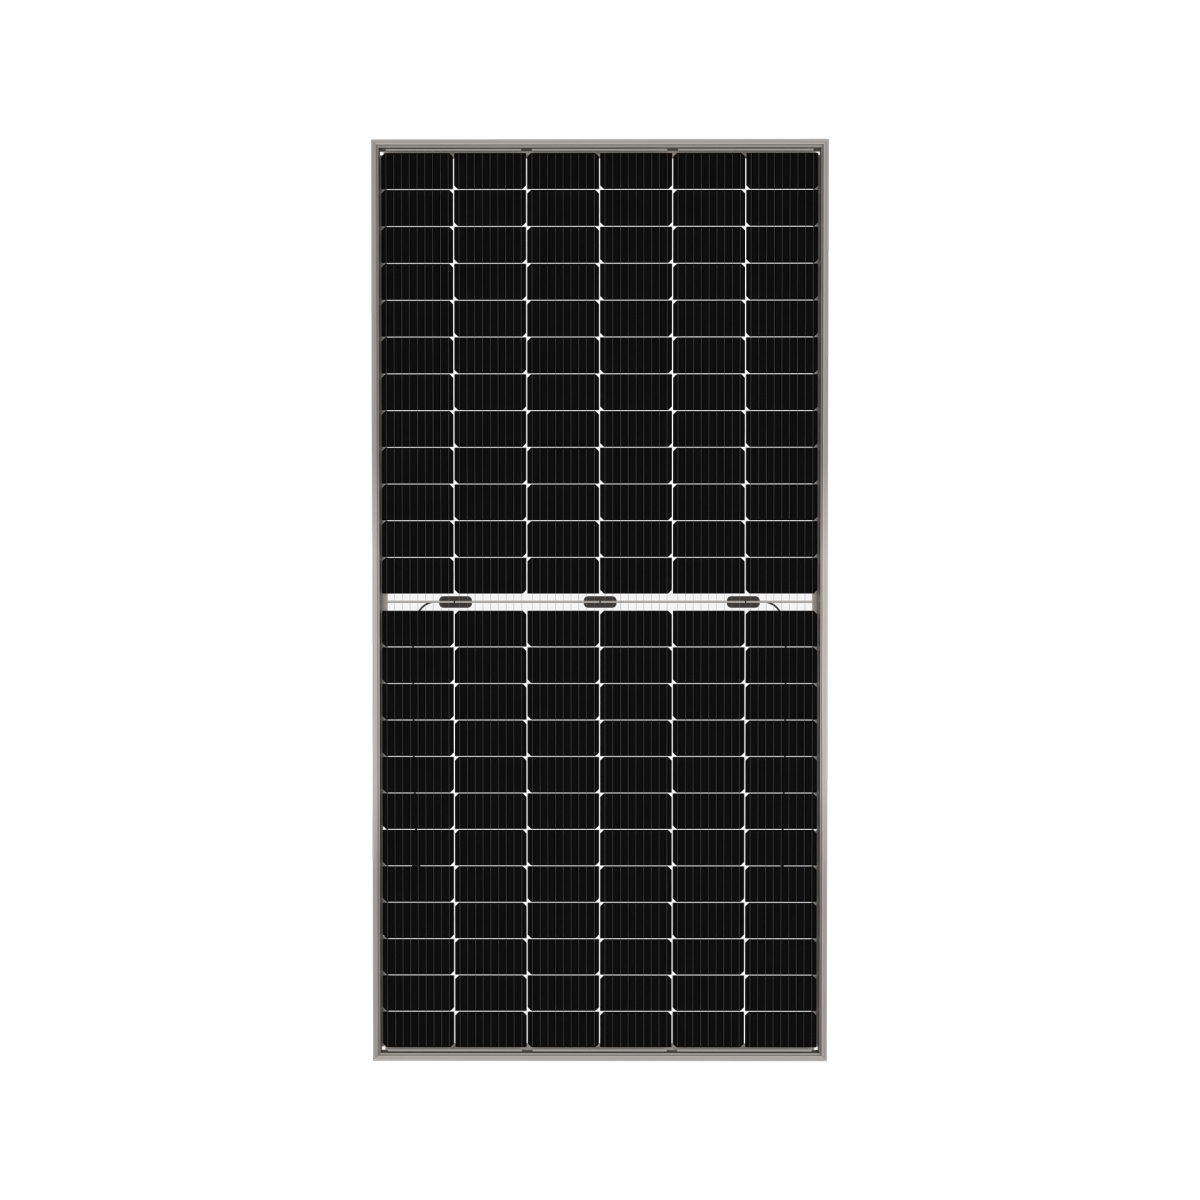 TommaTech 420 Watt 144 Percmono Bifacial Half-Cut Multi Busbar Solar Panel